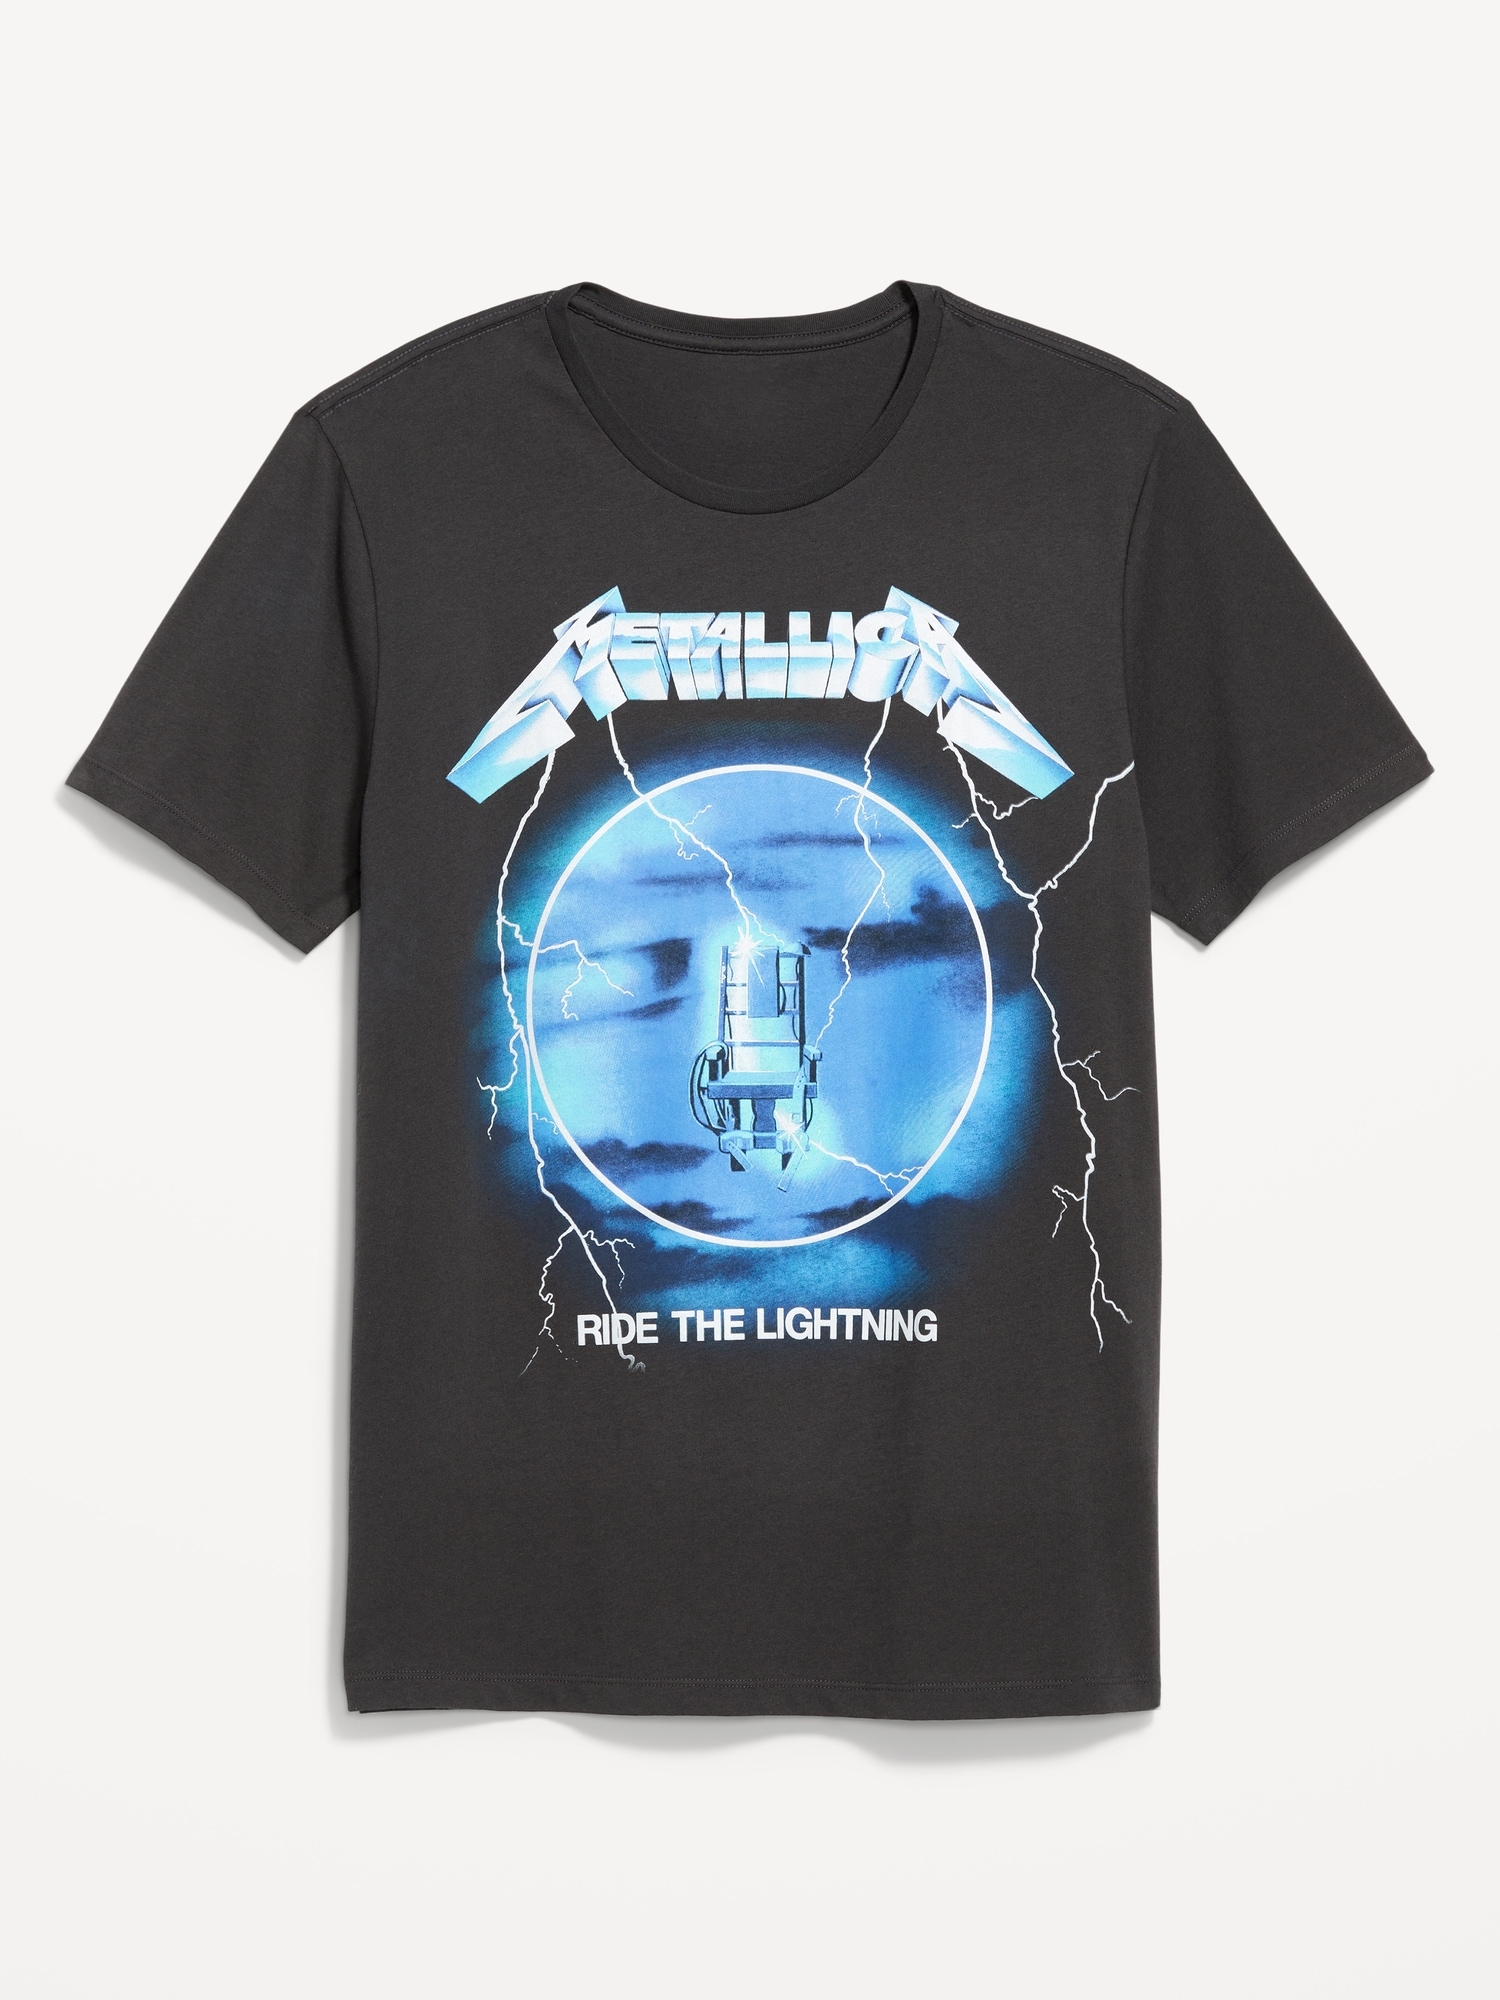 Metallica™ Gender-Neutral T-Shirt for Adults